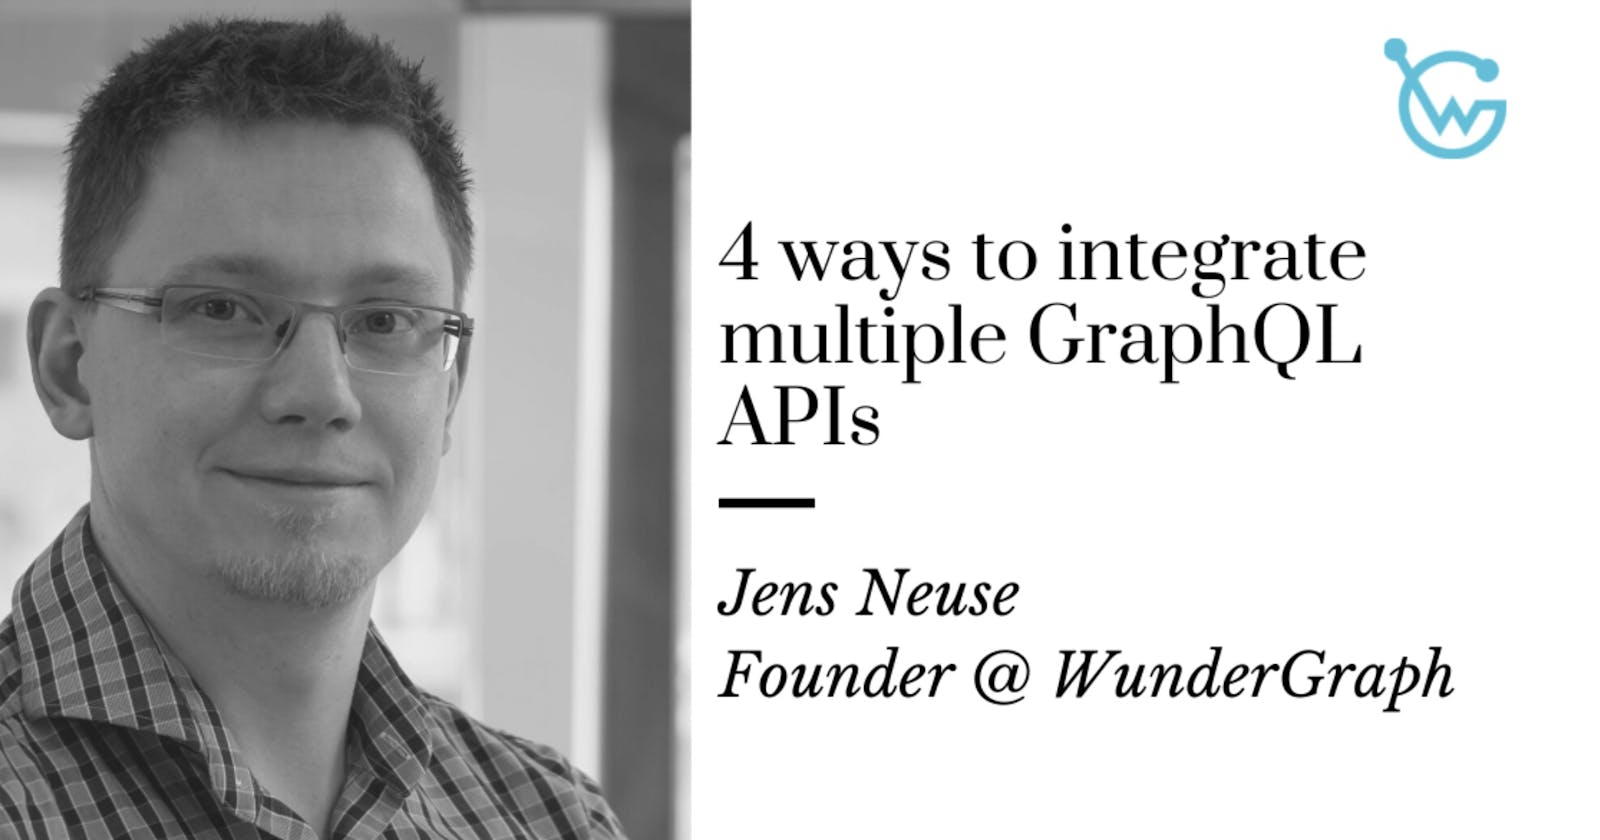 4 ways to stitch, integrate, compose & federate multiple GraphQL APIs